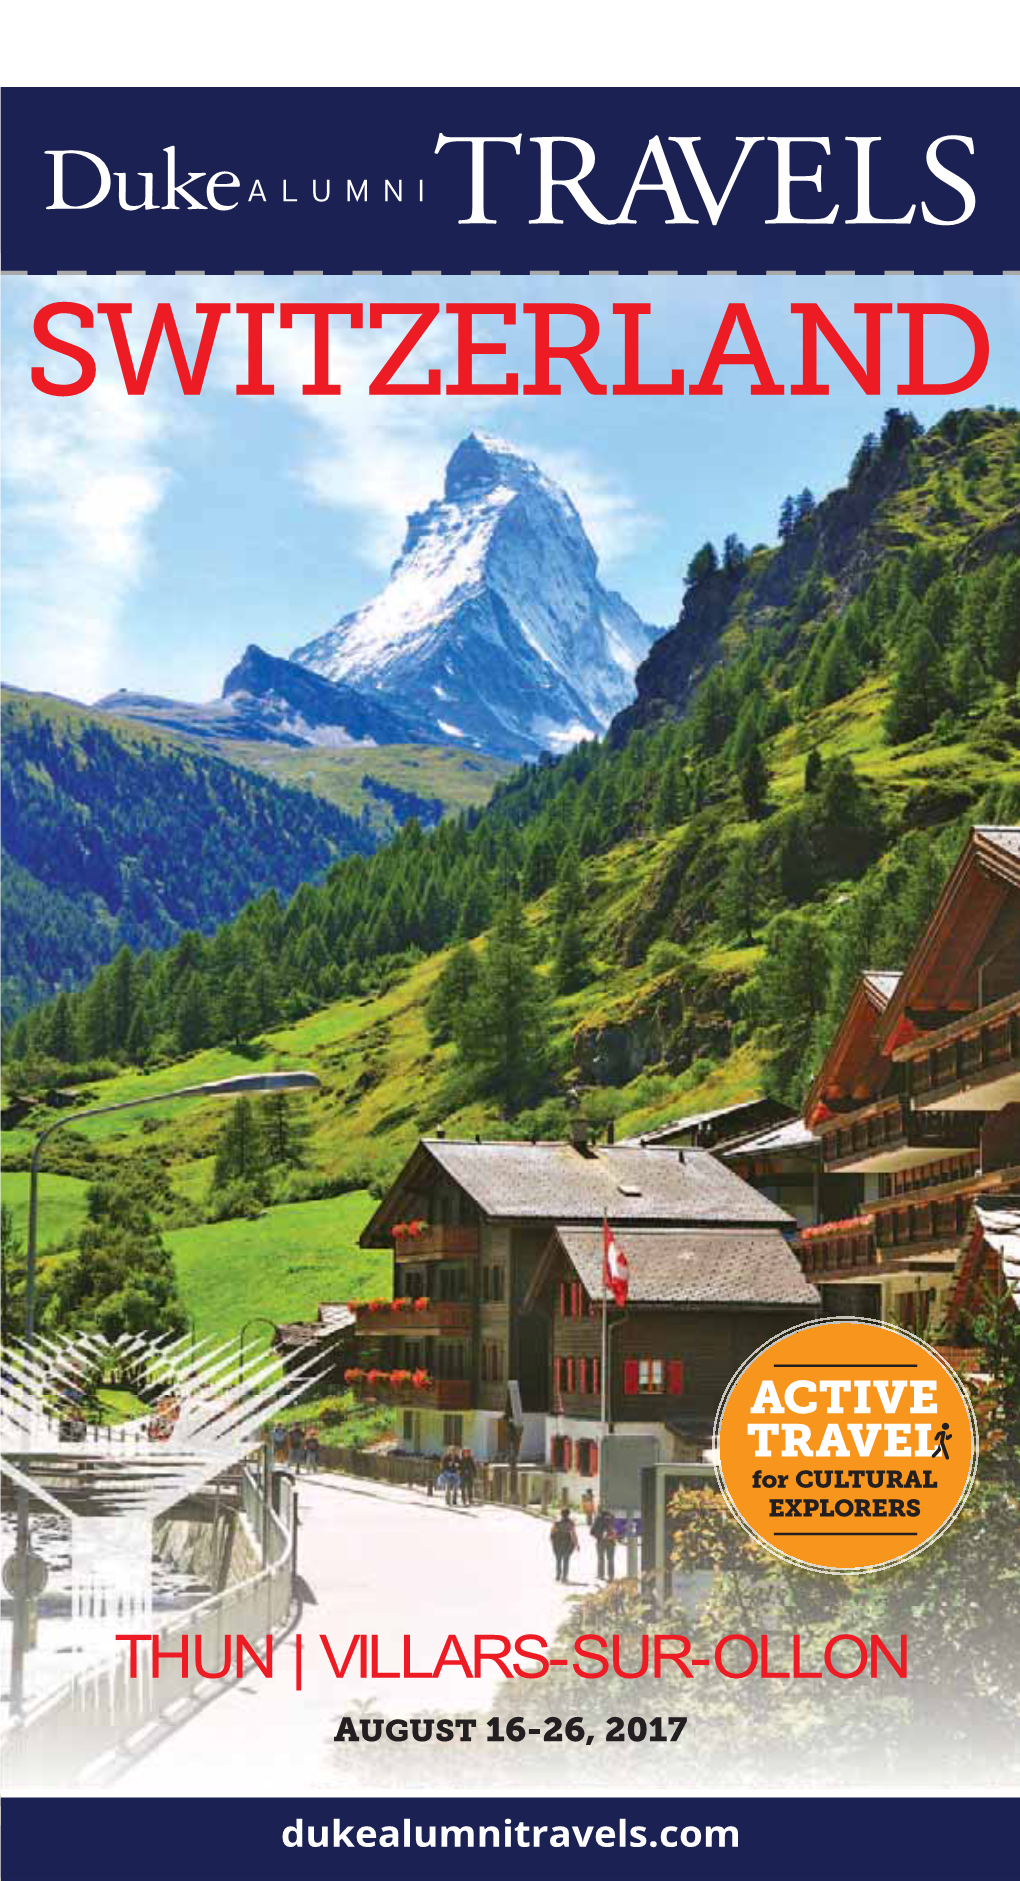 Switzerland Today! Trip #:11-23342W LAND PROGRAM Send To: Switzerland Duke Alumni Association August 17-26, 2017 Duke Alumni Travels Paid